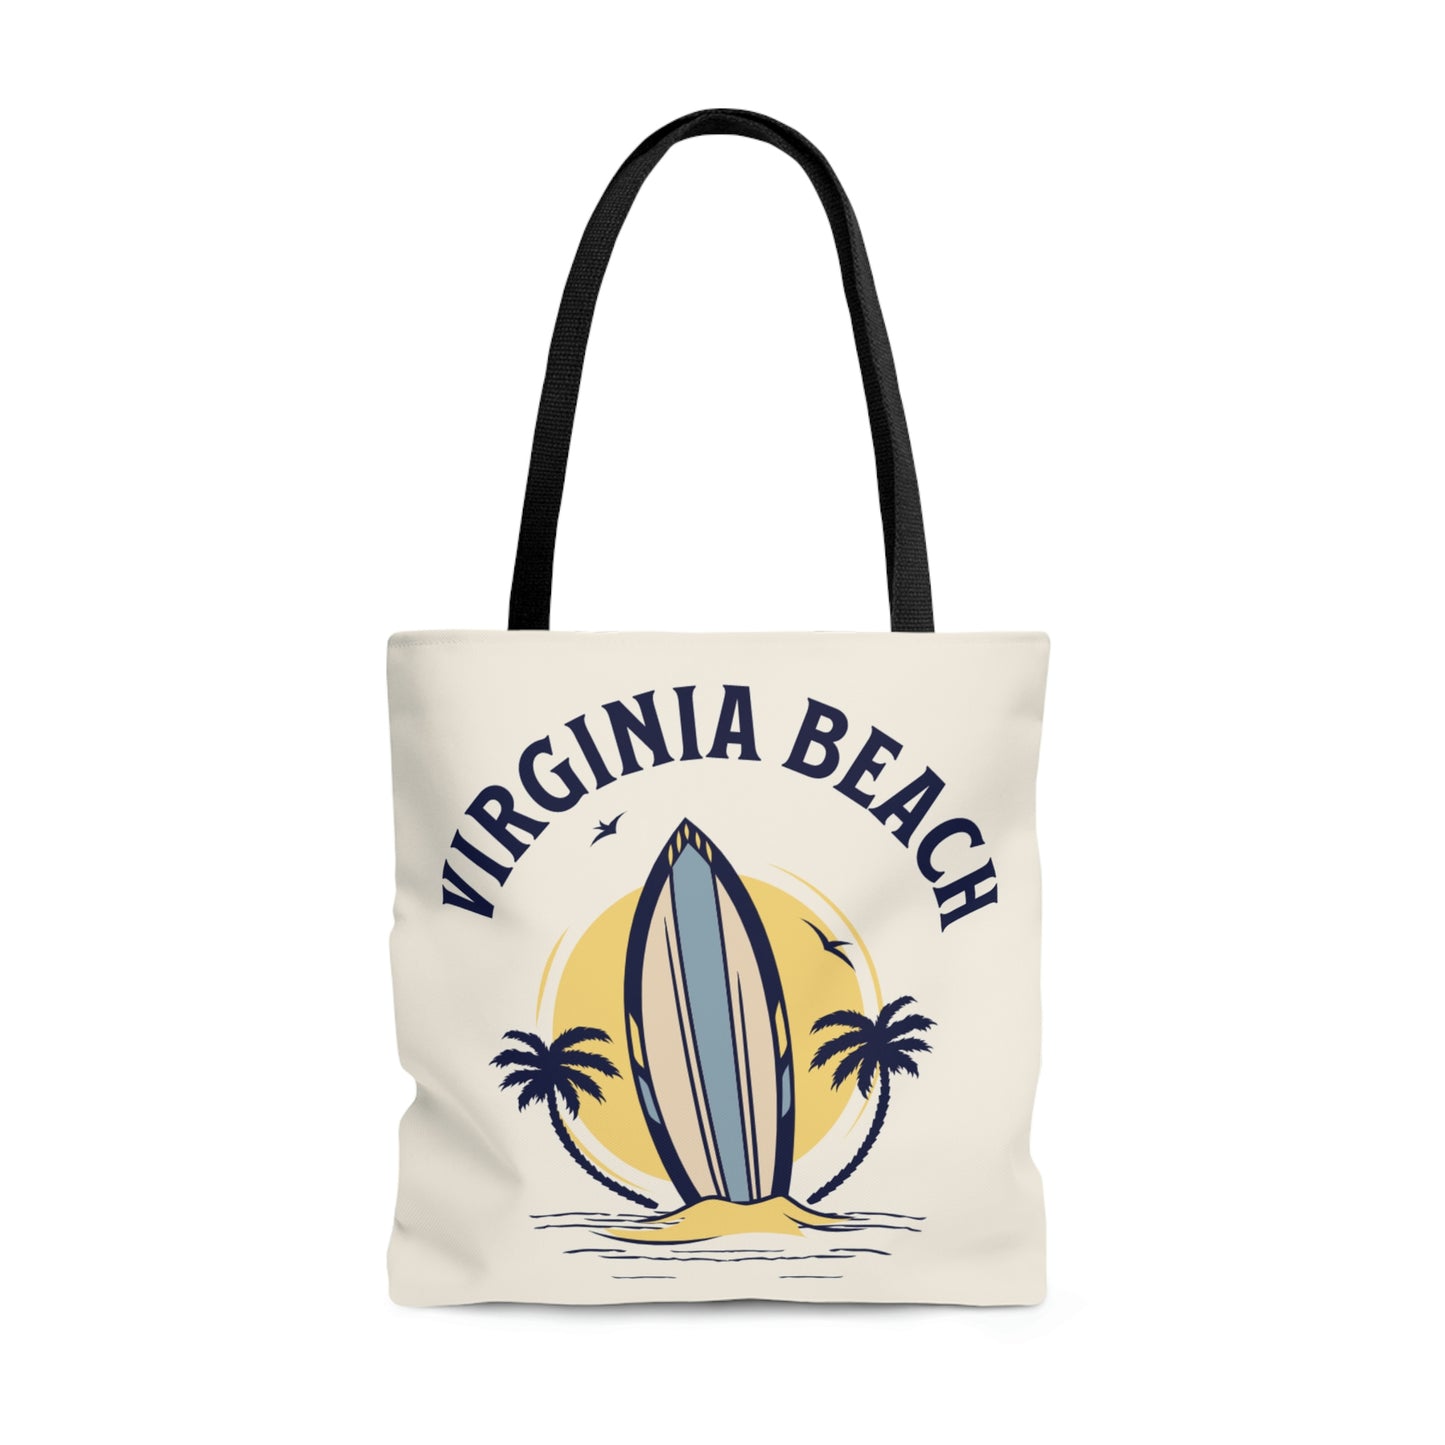 Virginia Beach Tote Bag